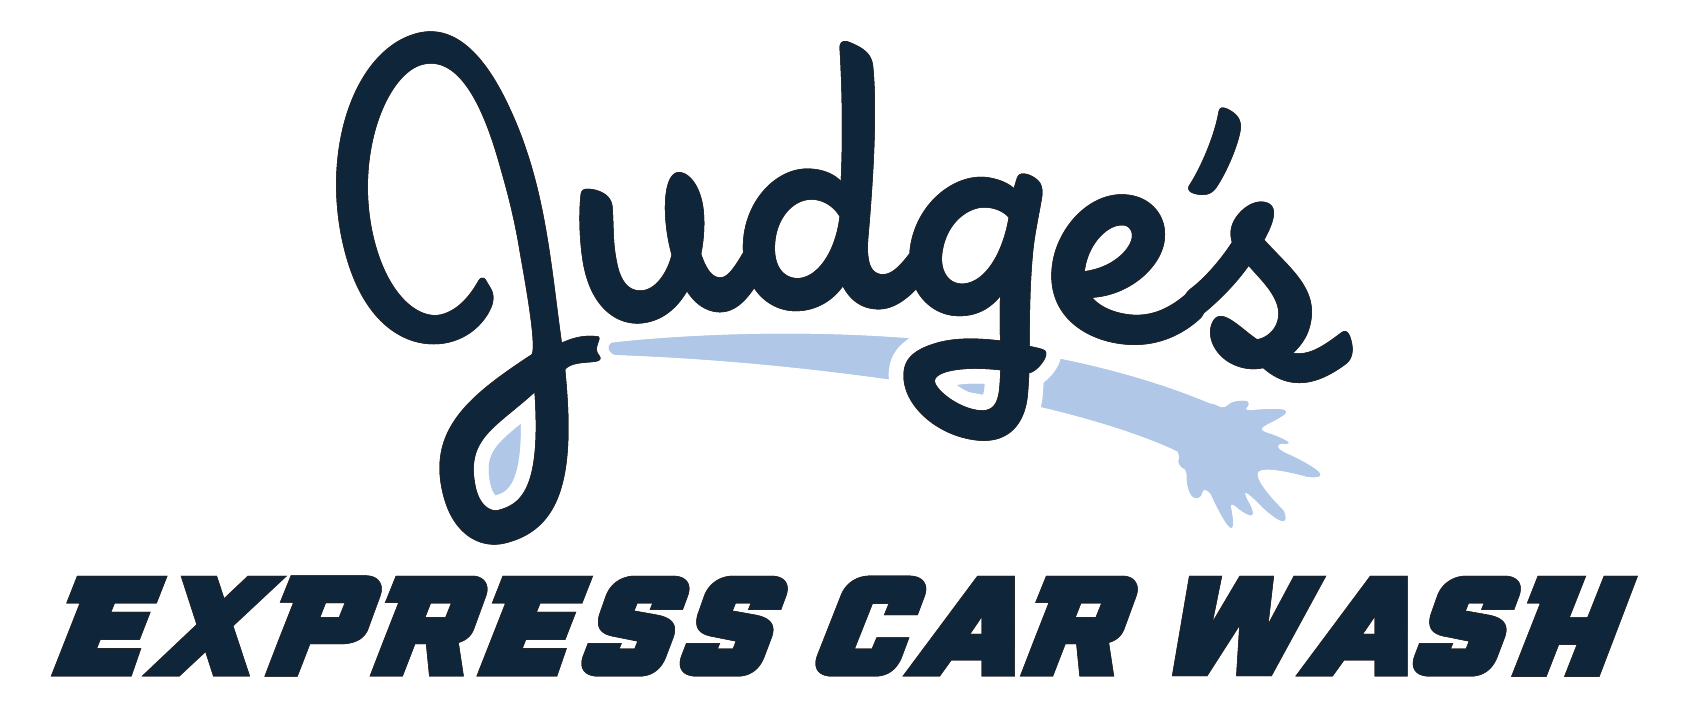 judges logo with white stroke